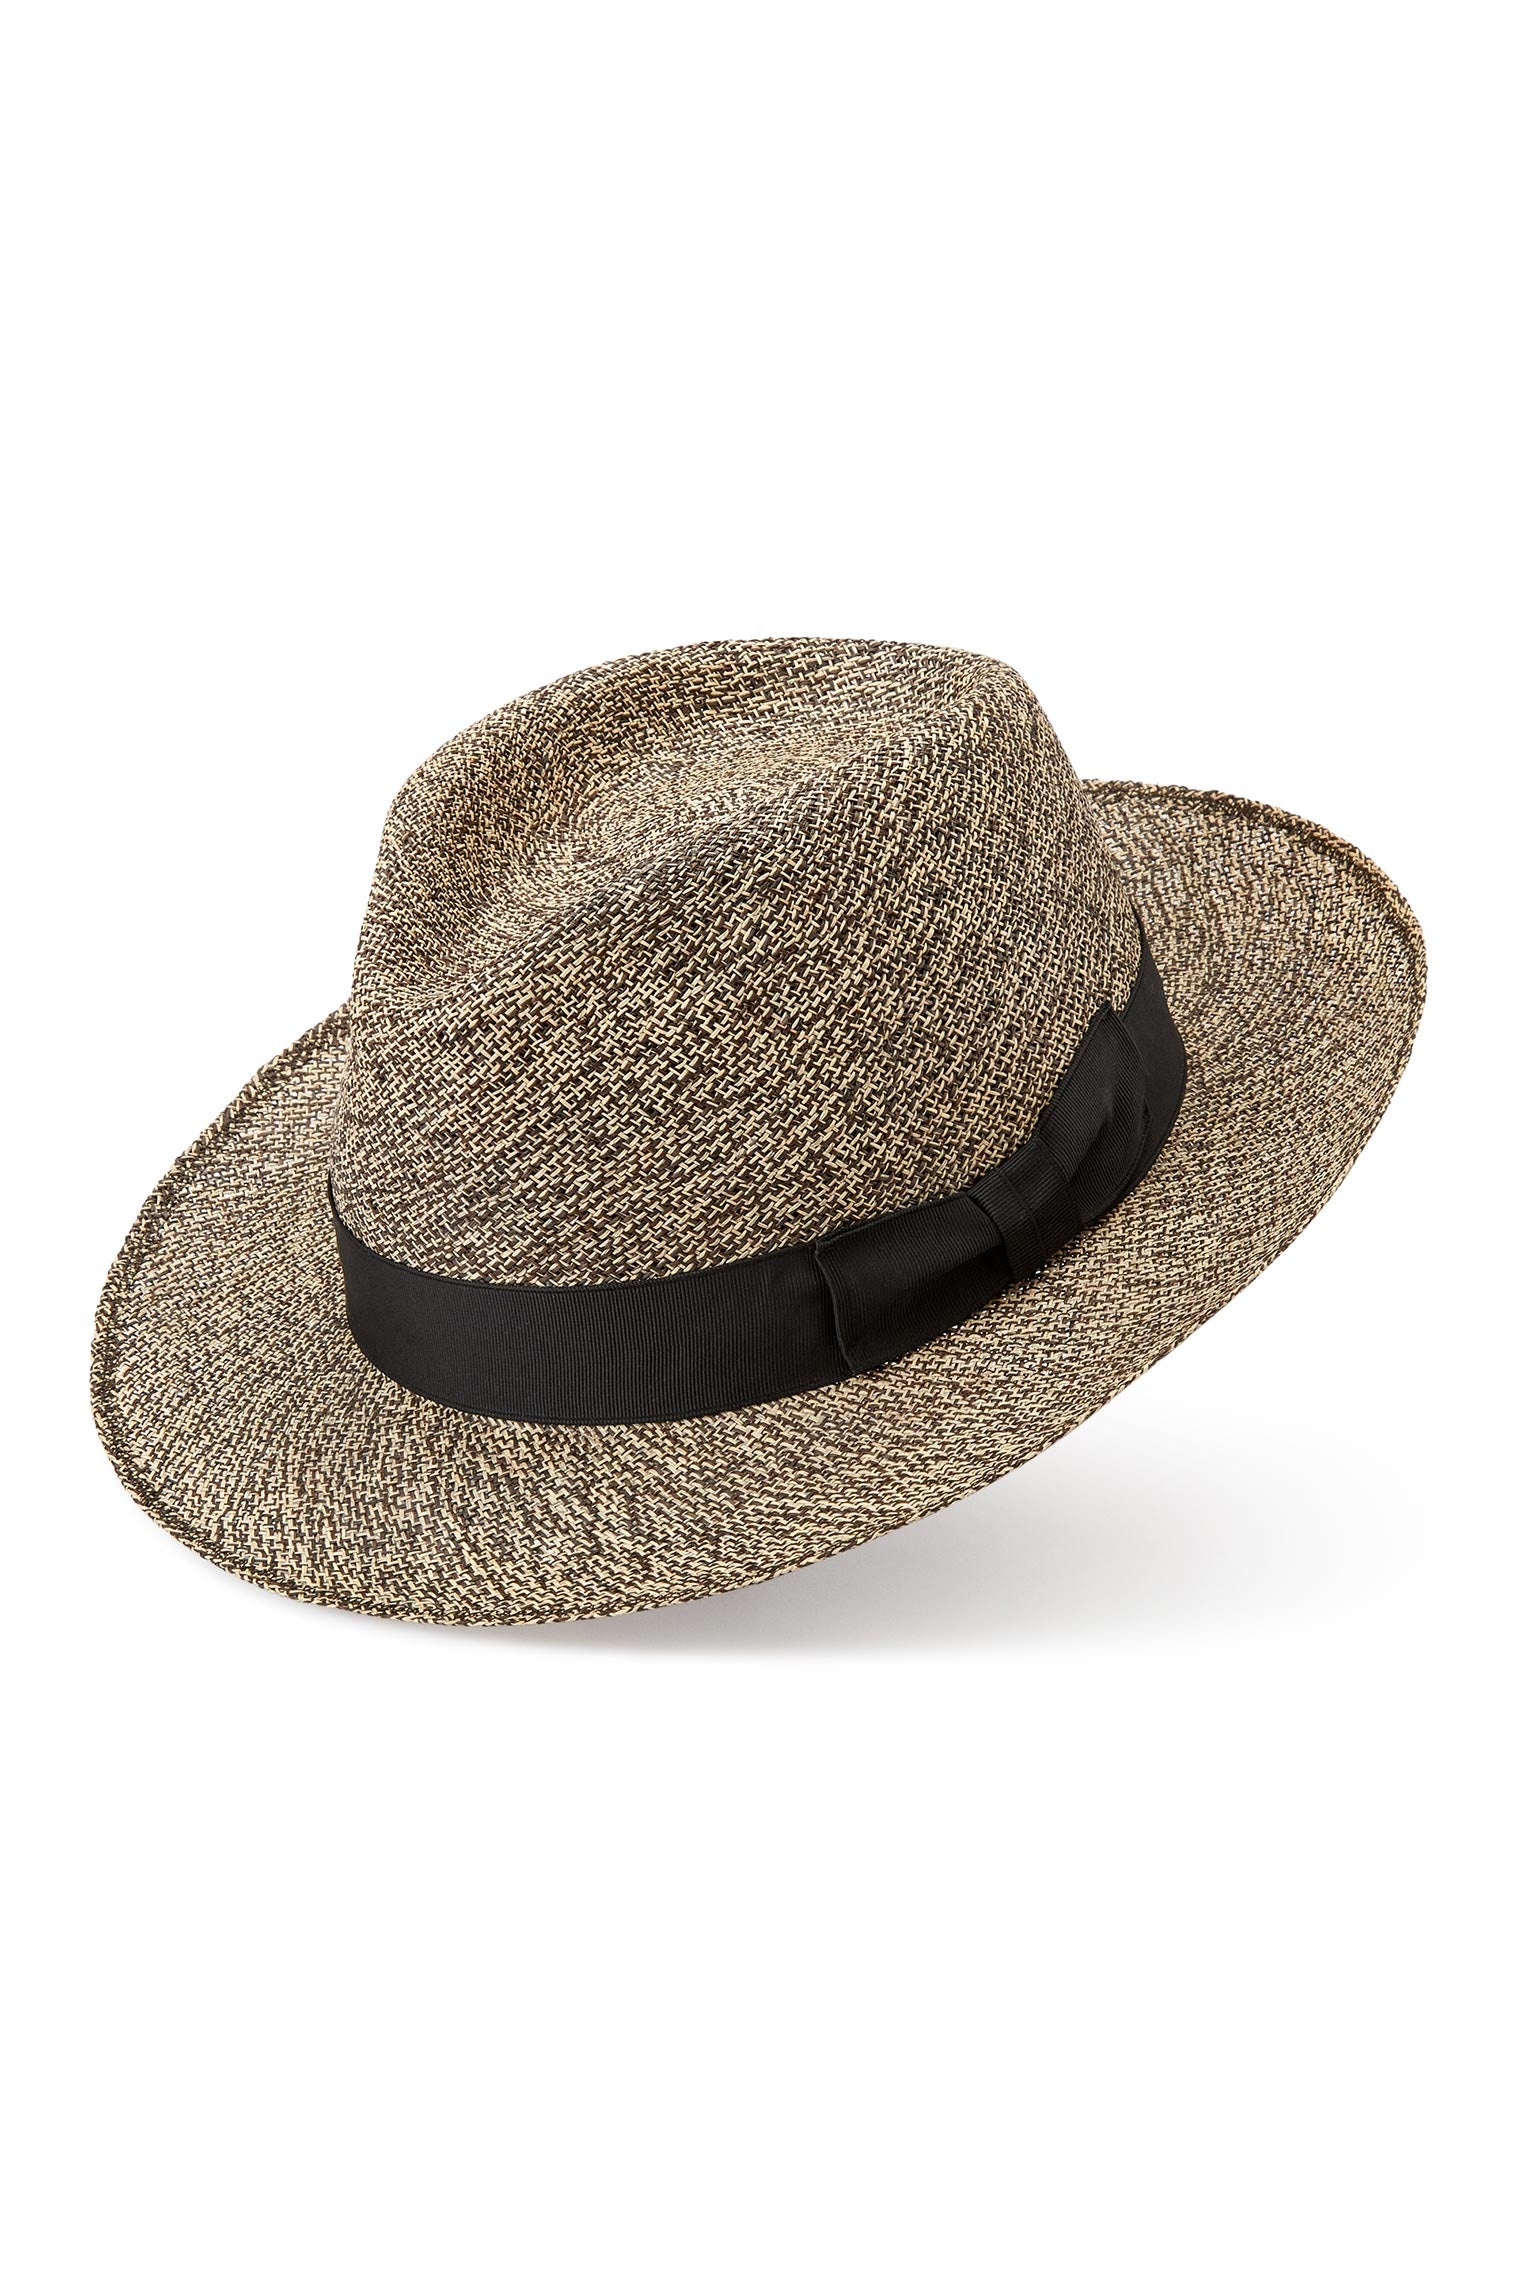 Naples Panama - Men's Hats - Lock & Co. Hatters London UK